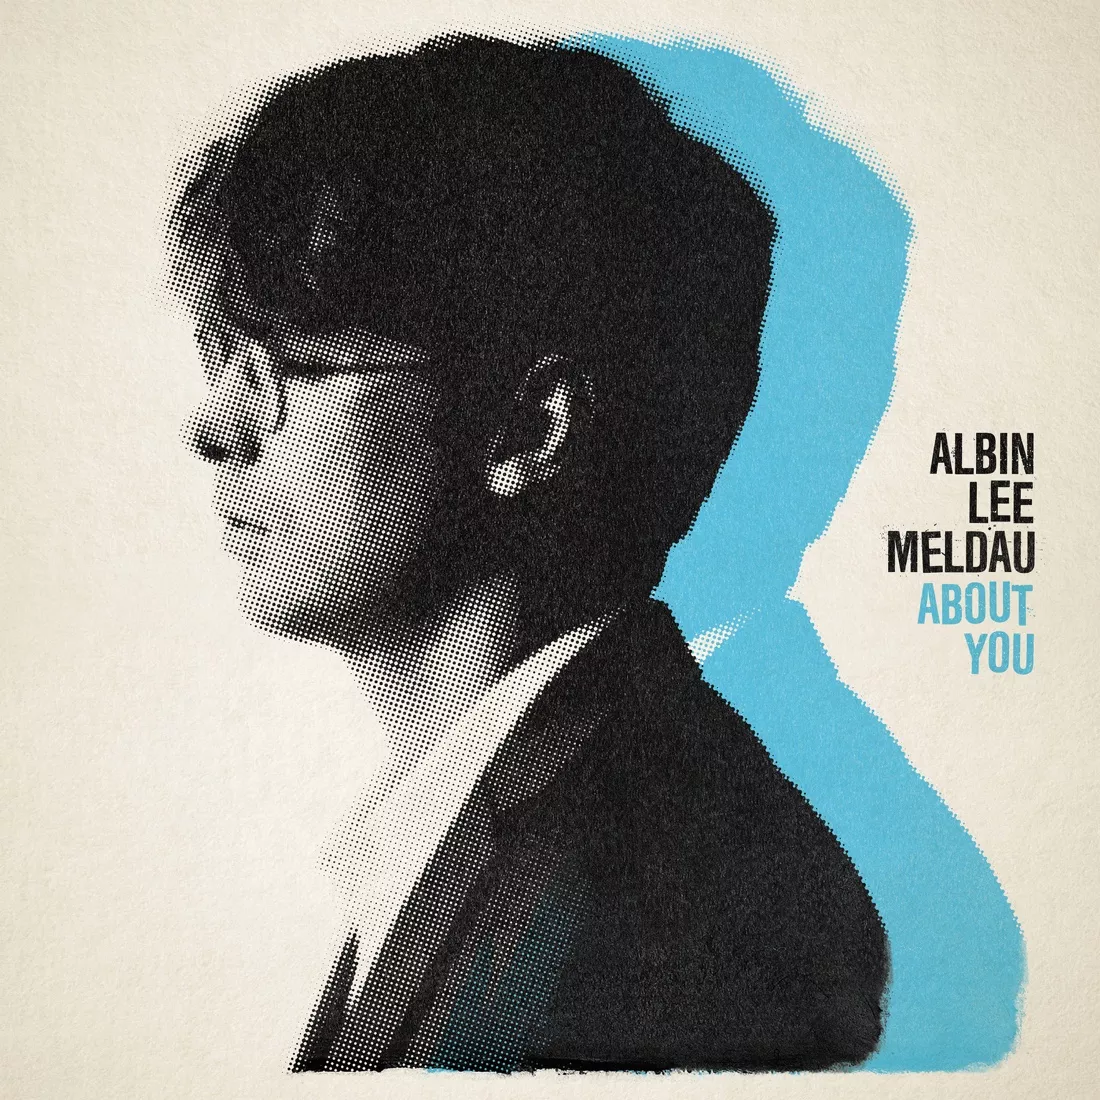 About You - Albin Lee Meldau